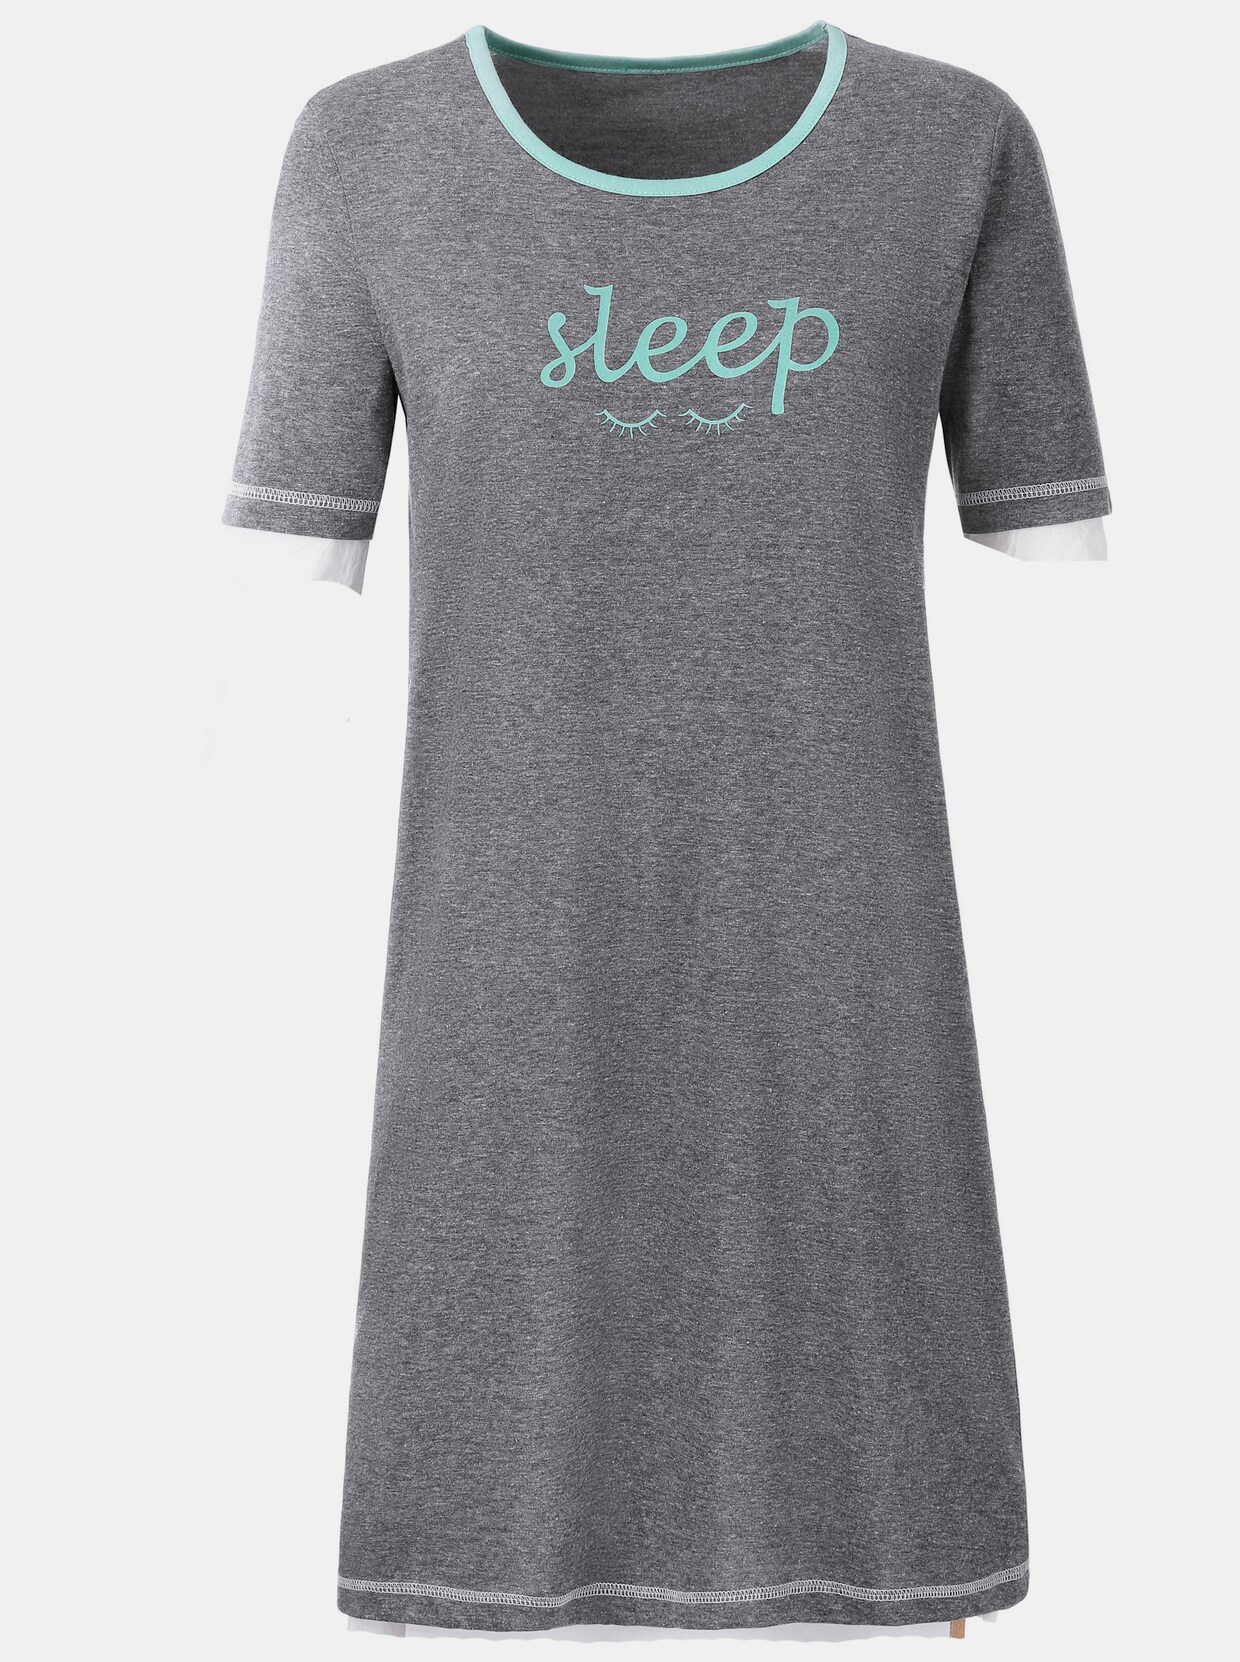 wäschepur Sleepshirts - grau-meliert + mint